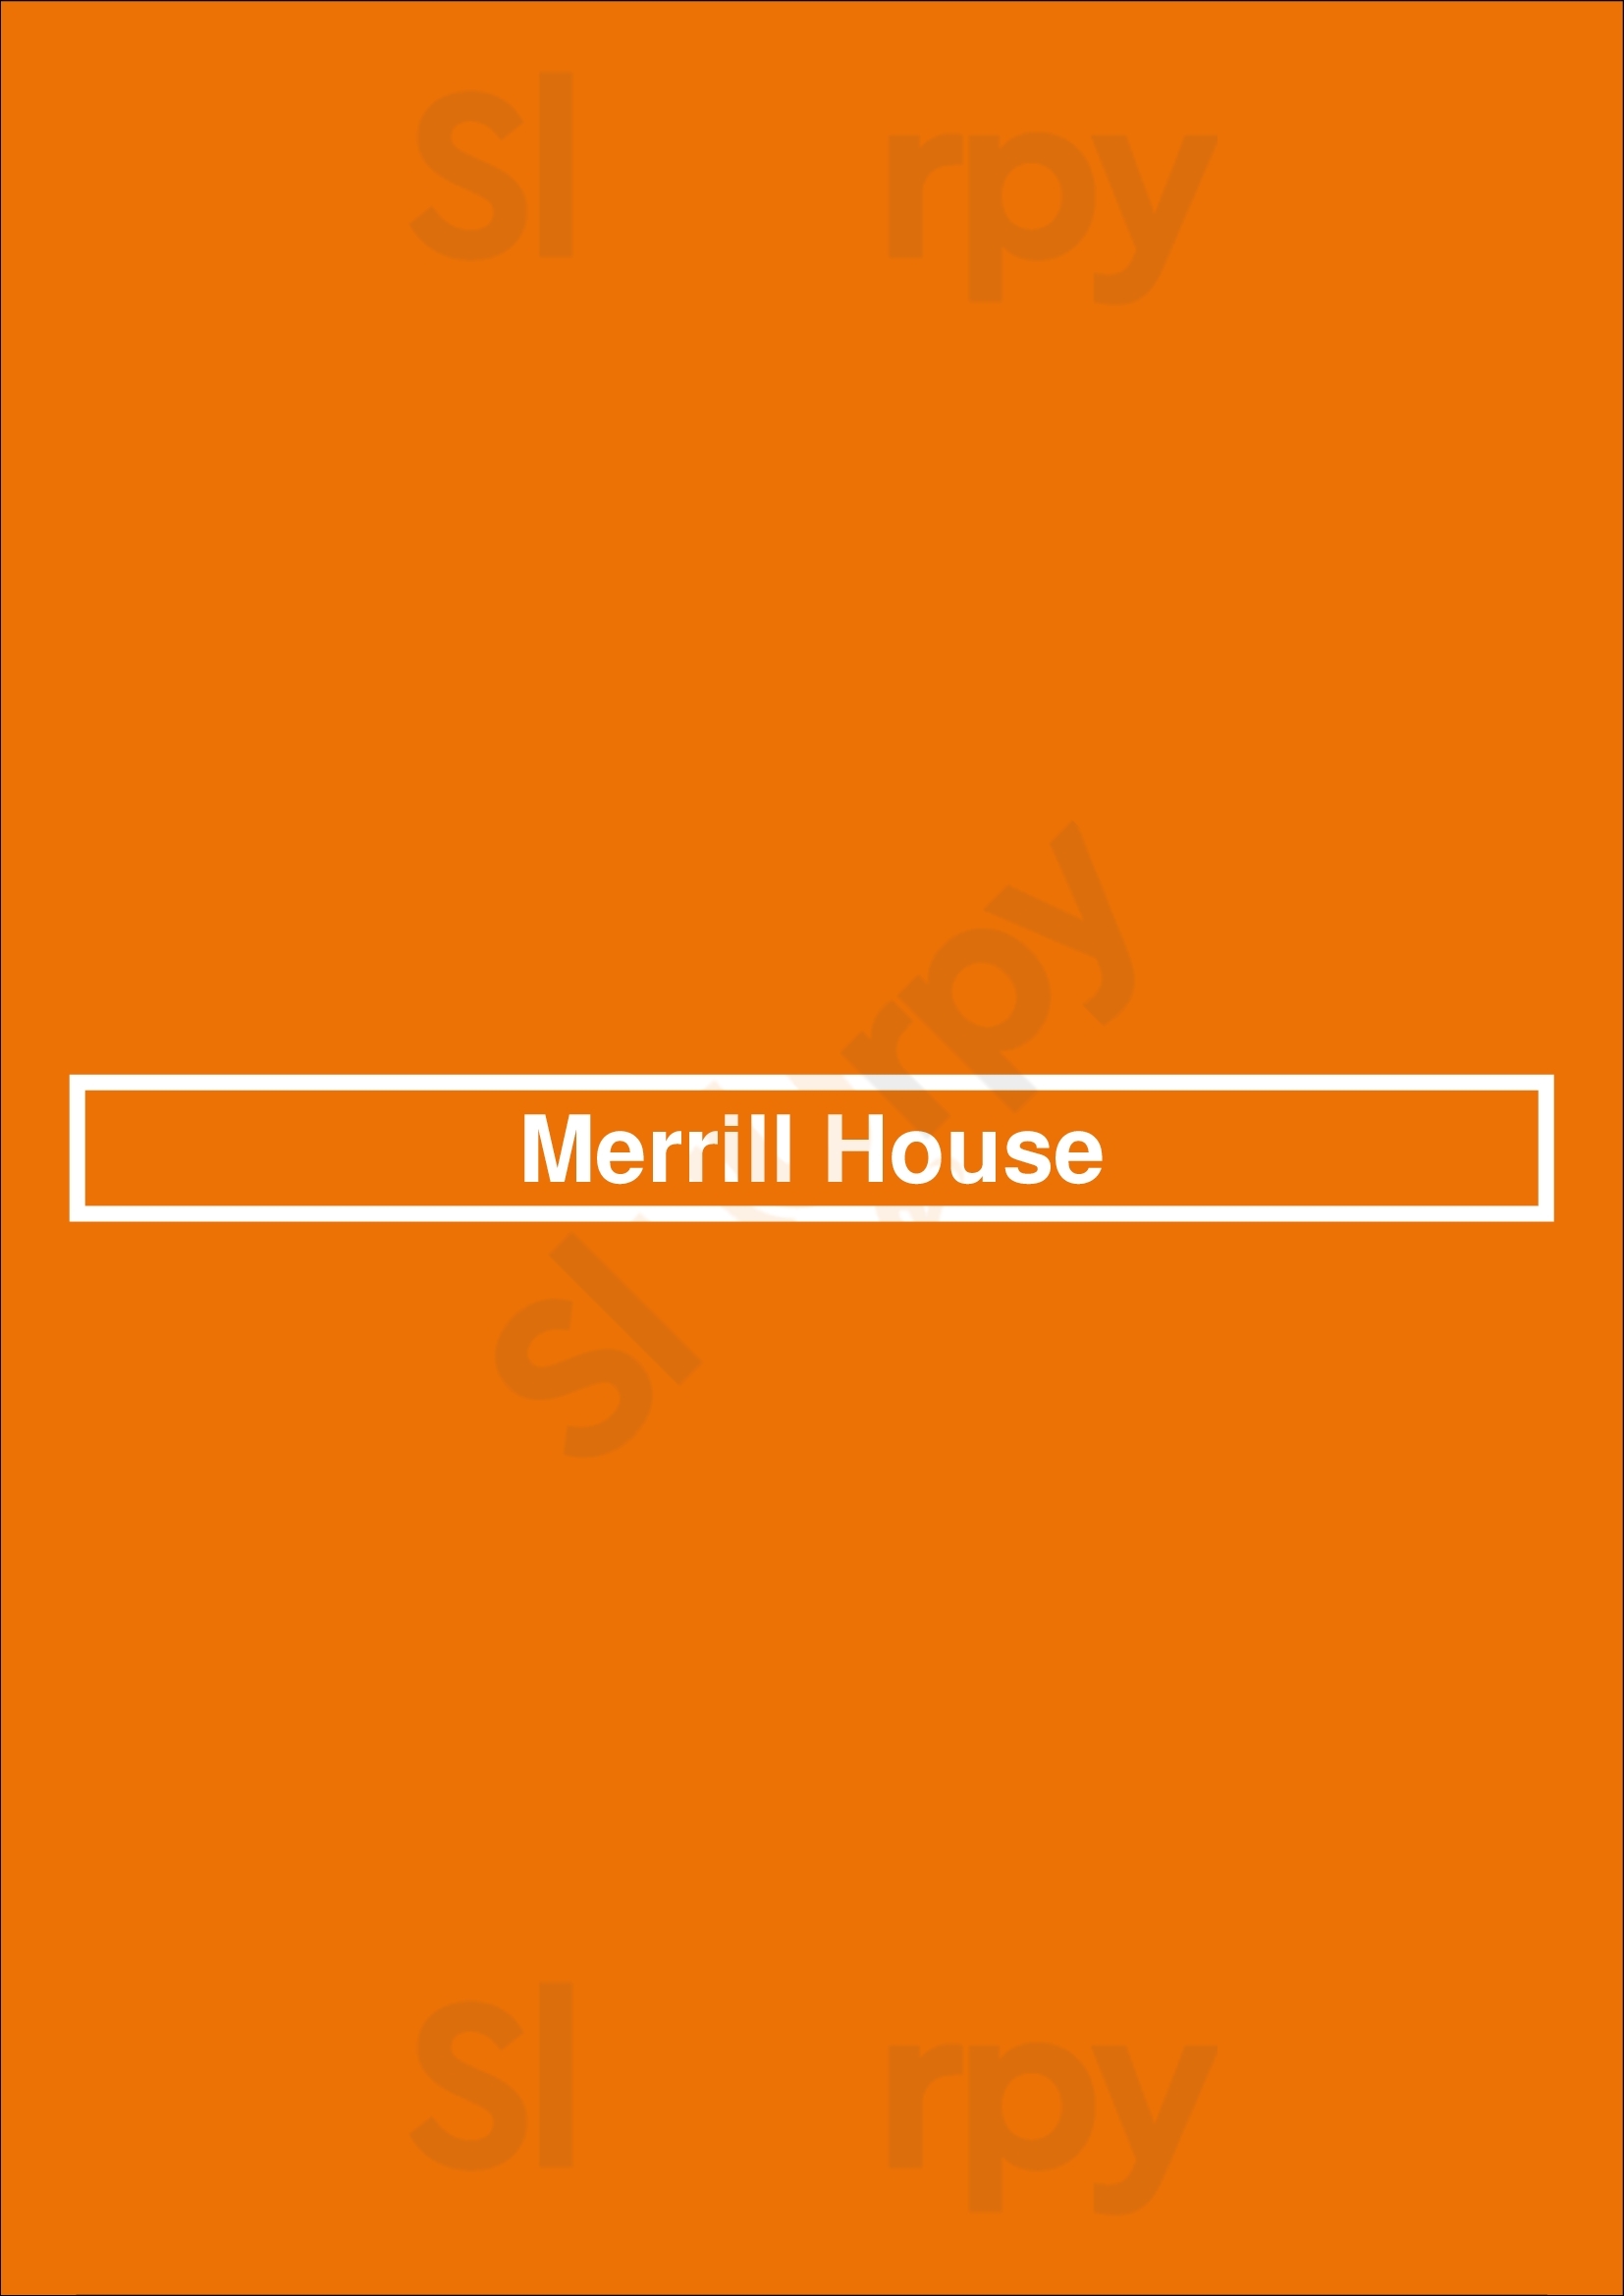 Merrill House Picton Menu - 1